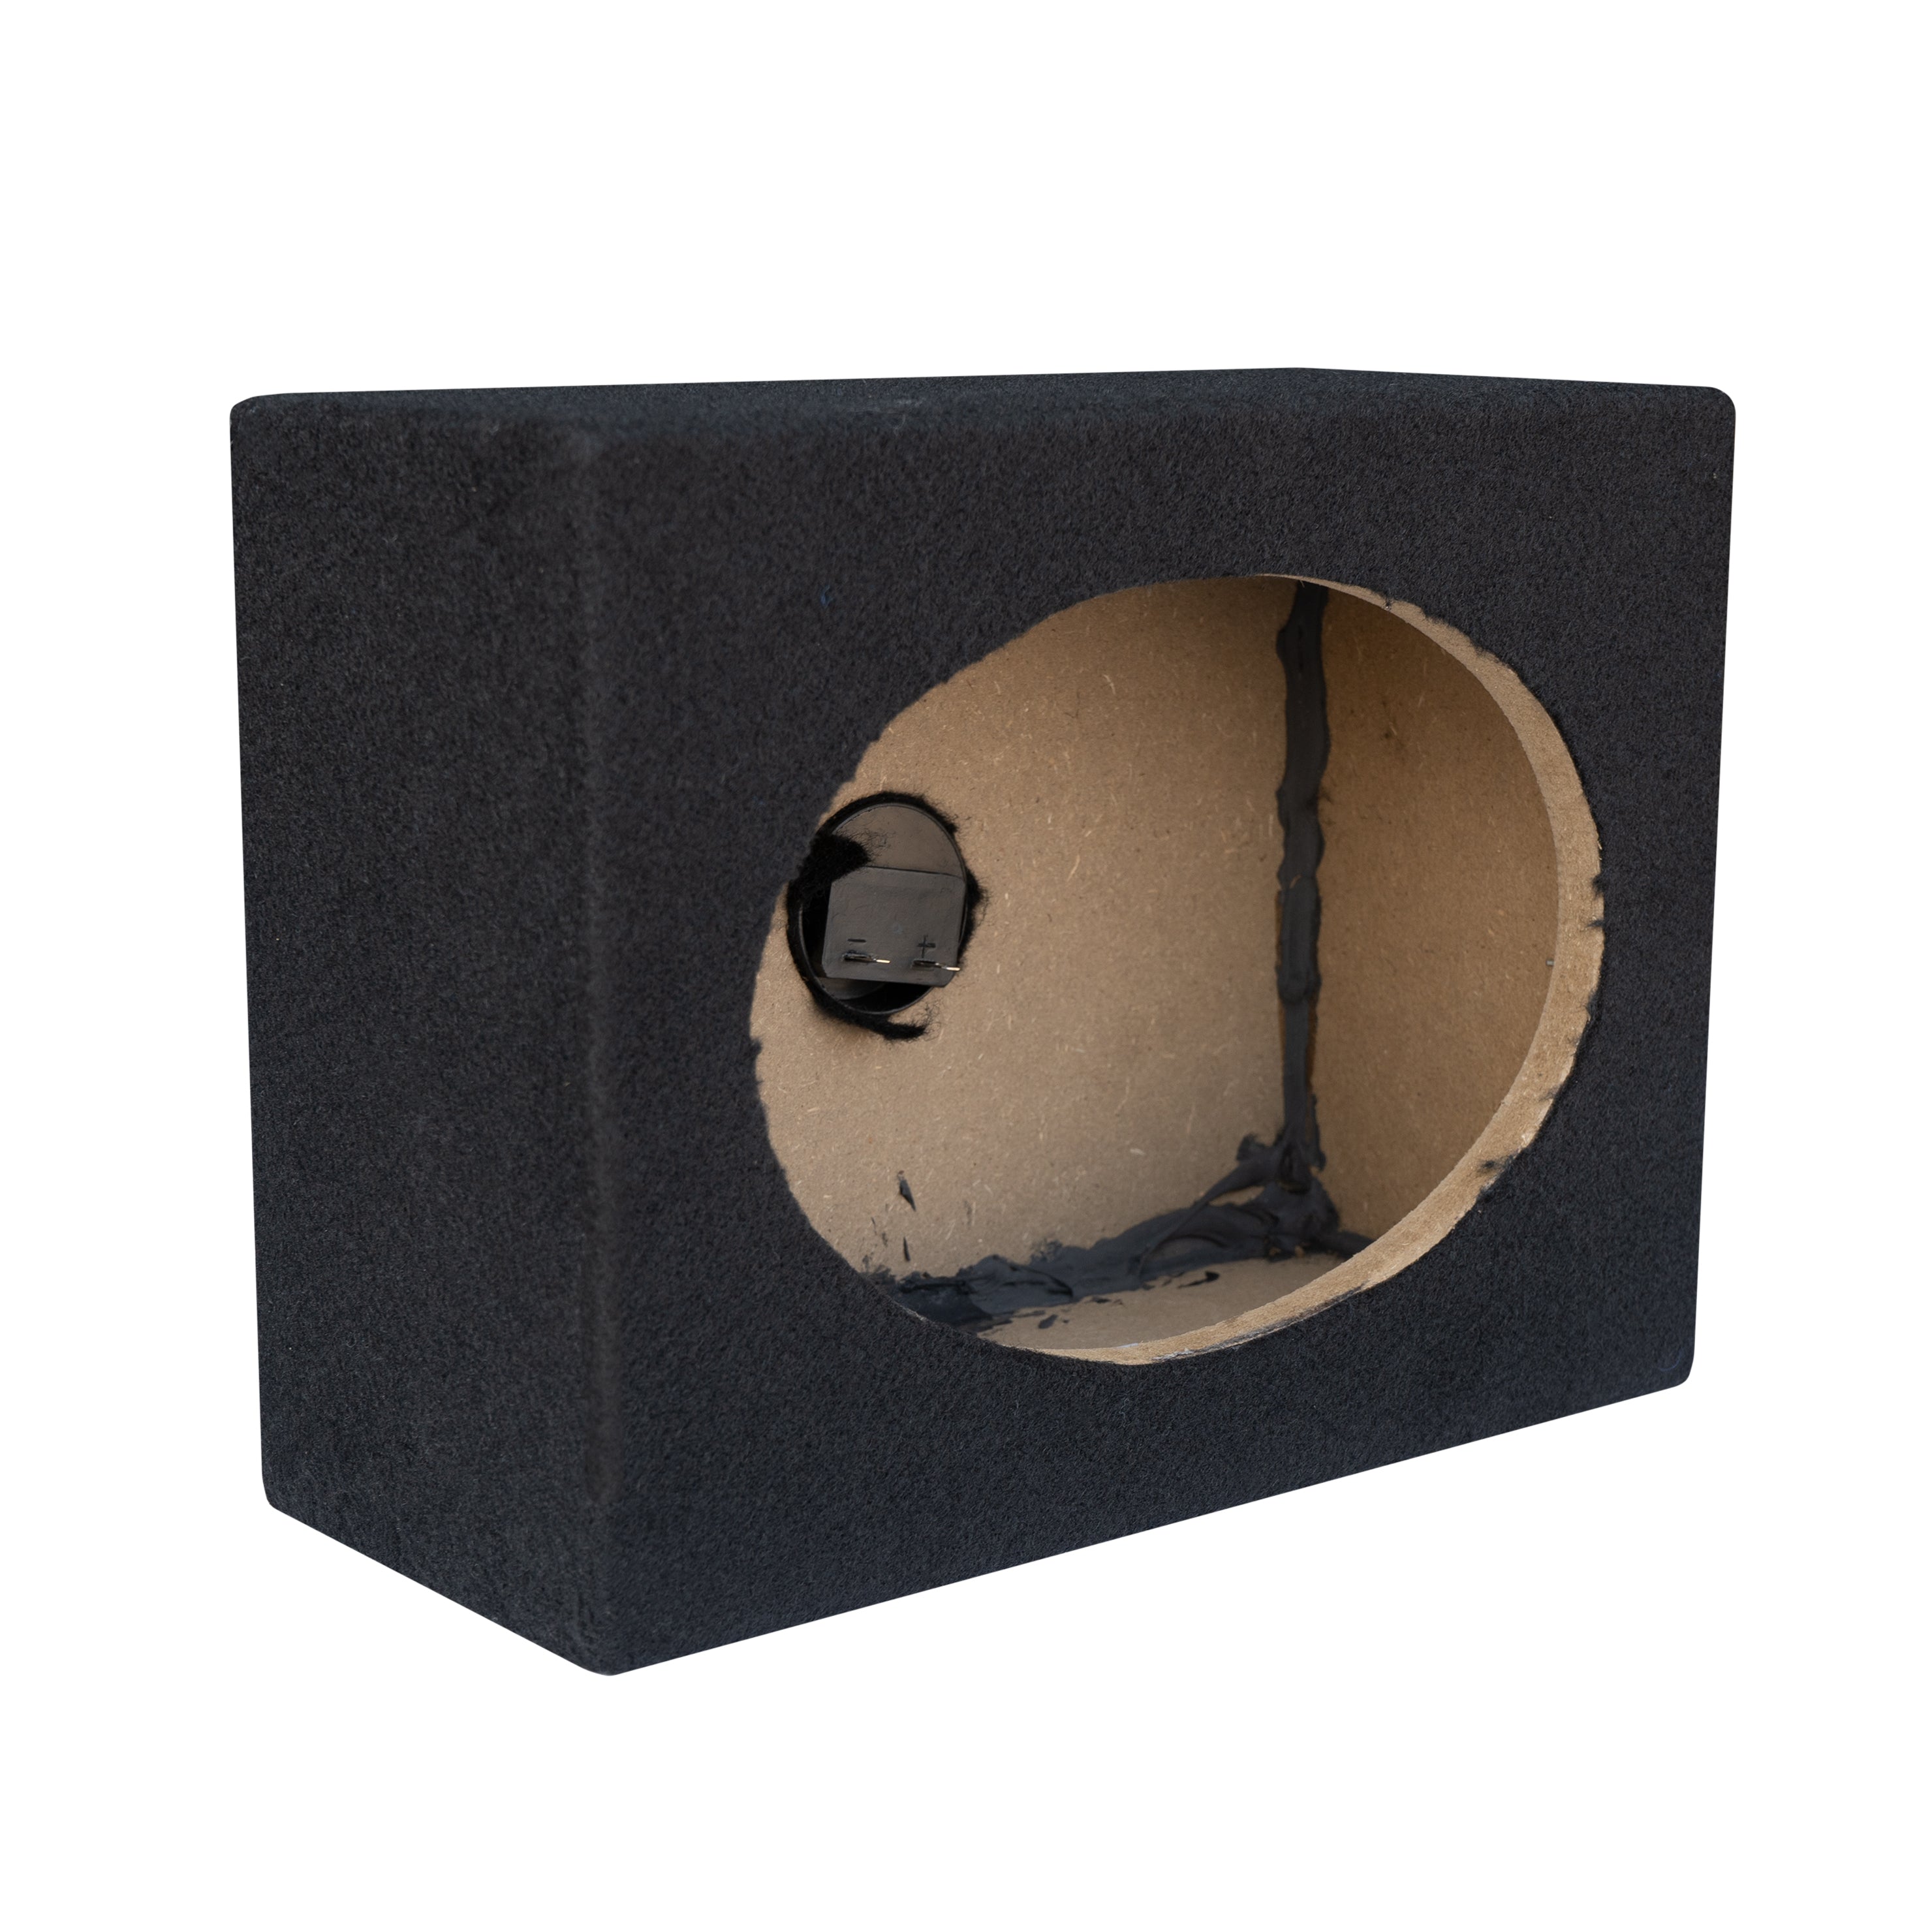 SoundBox E Series Single 6x9"  Sealed Speaker Enclosure Slim - Pair